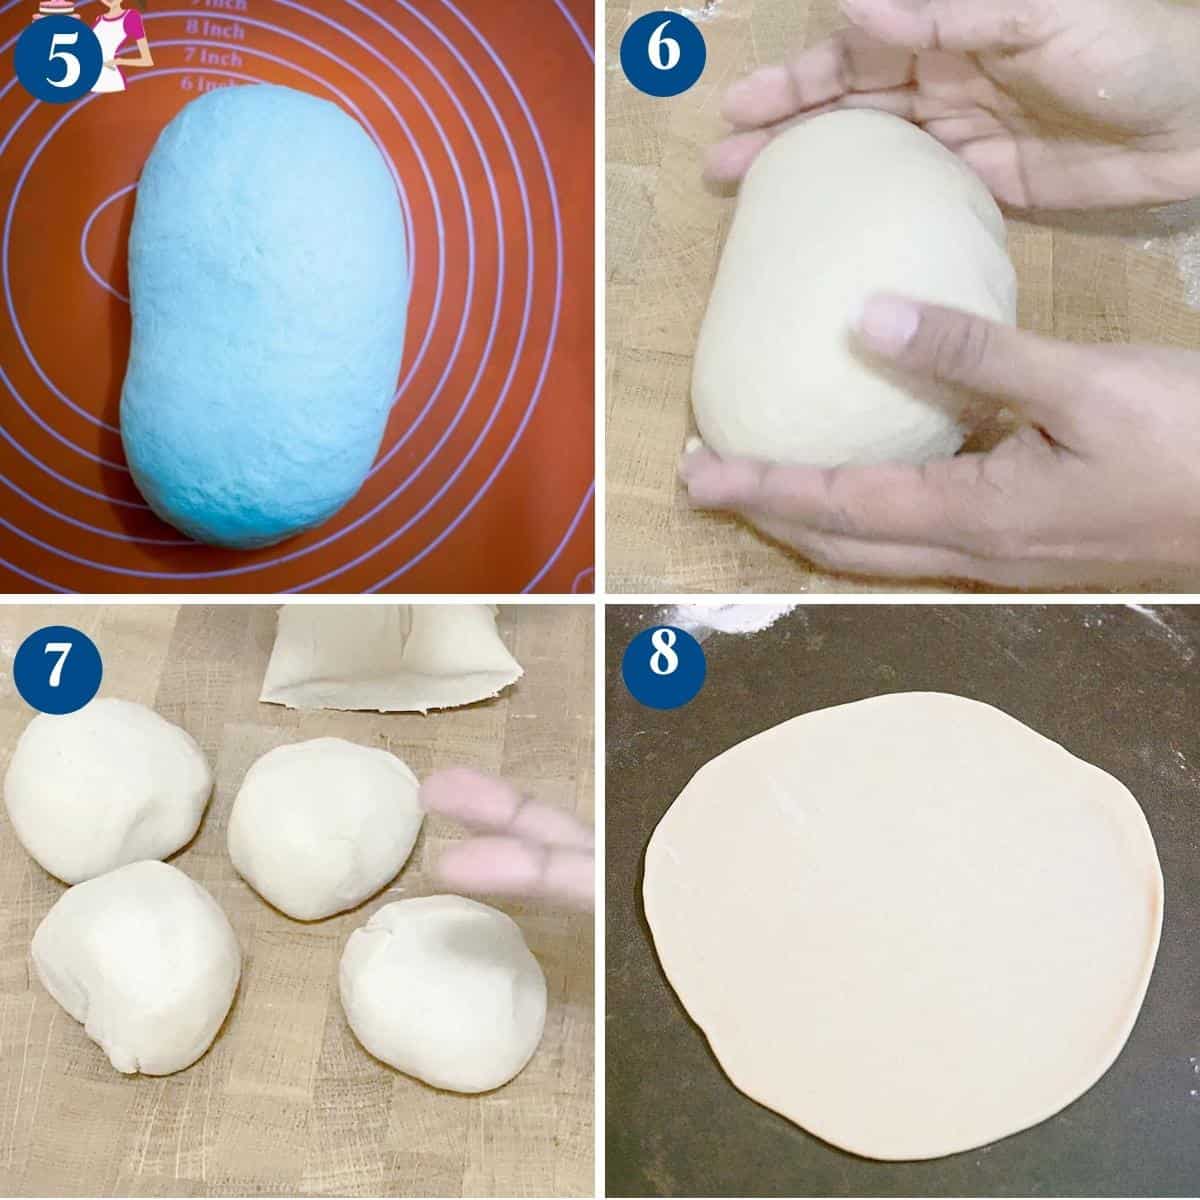 Progress pictures divide the tortilla dough.